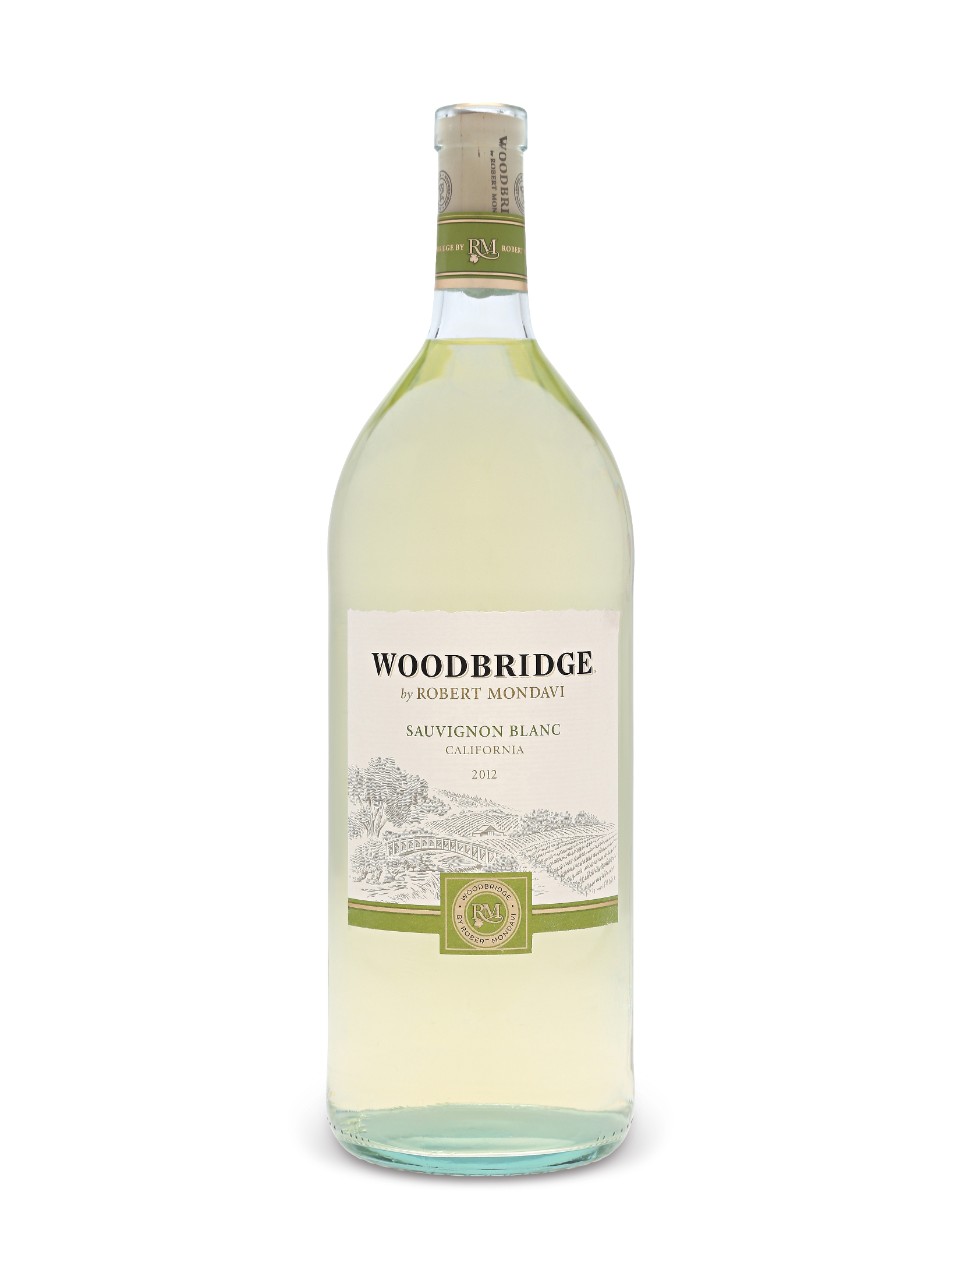 Woodbridge by Robert Mondavi Sauvignon Blanc